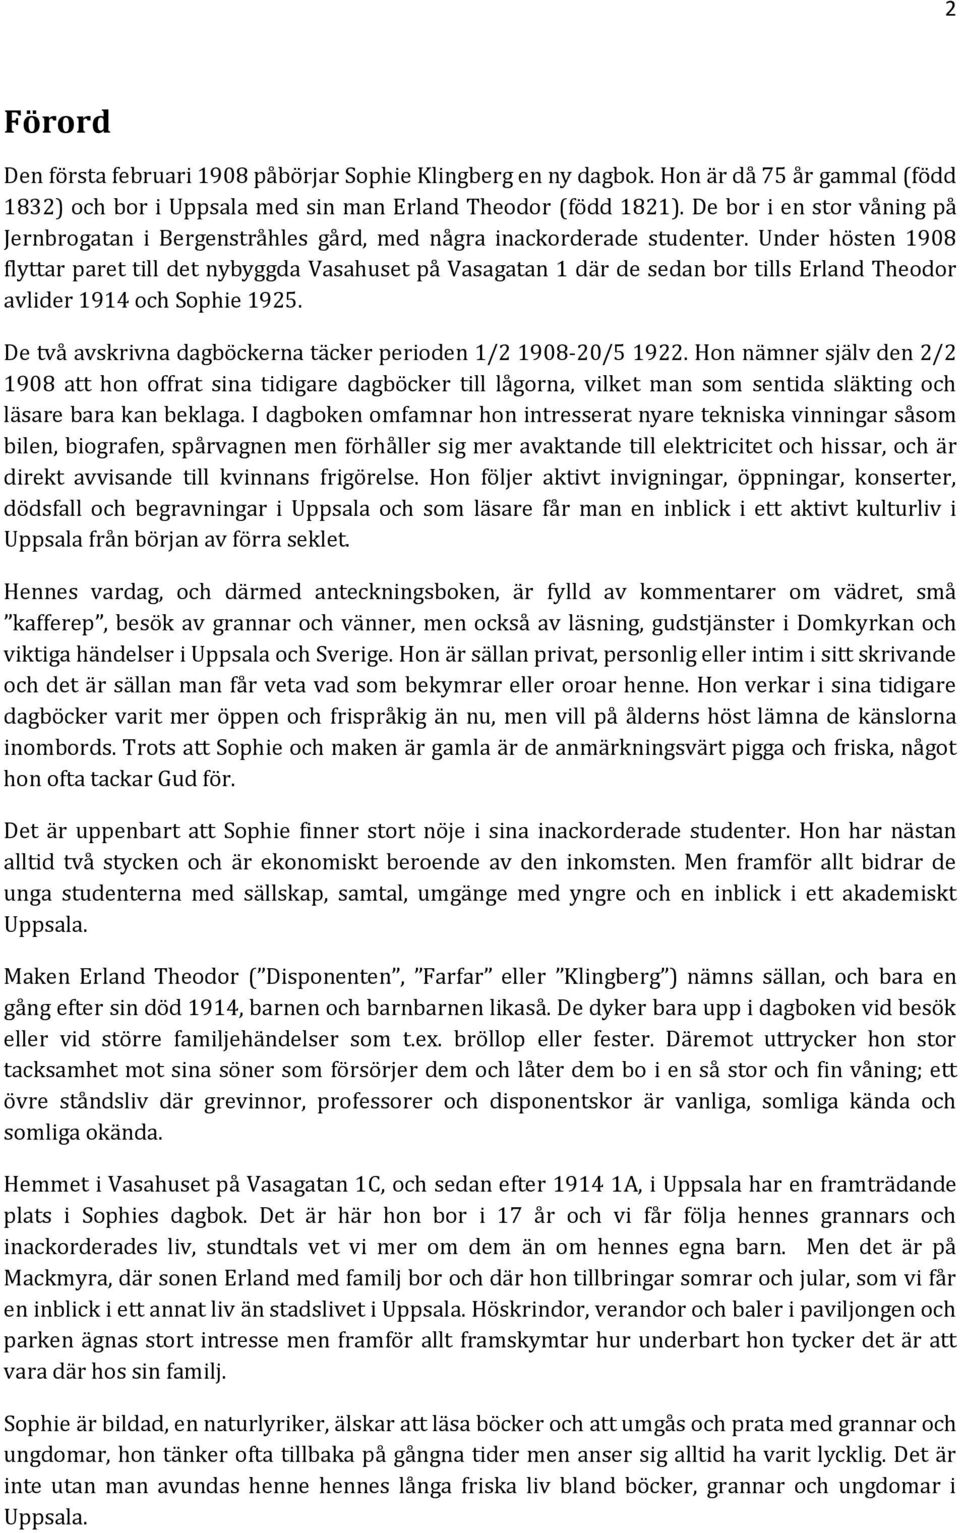 Sophie Klingberg dagbok - PDF Gratis nedladdning